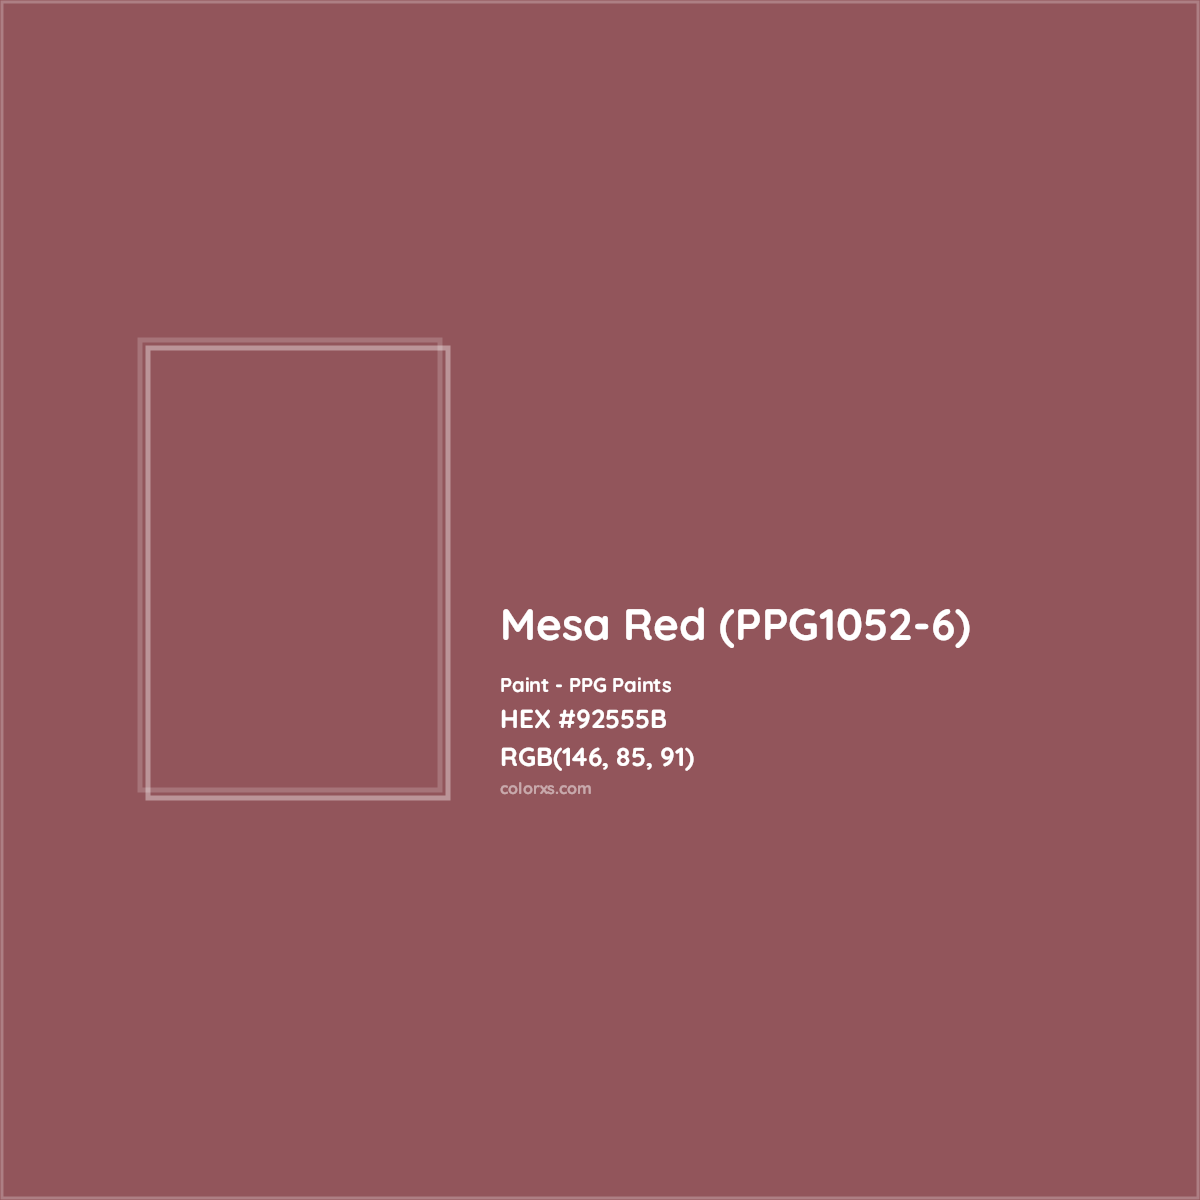 HEX #92555B Mesa Red (PPG1052-6) Paint PPG Paints - Color Code